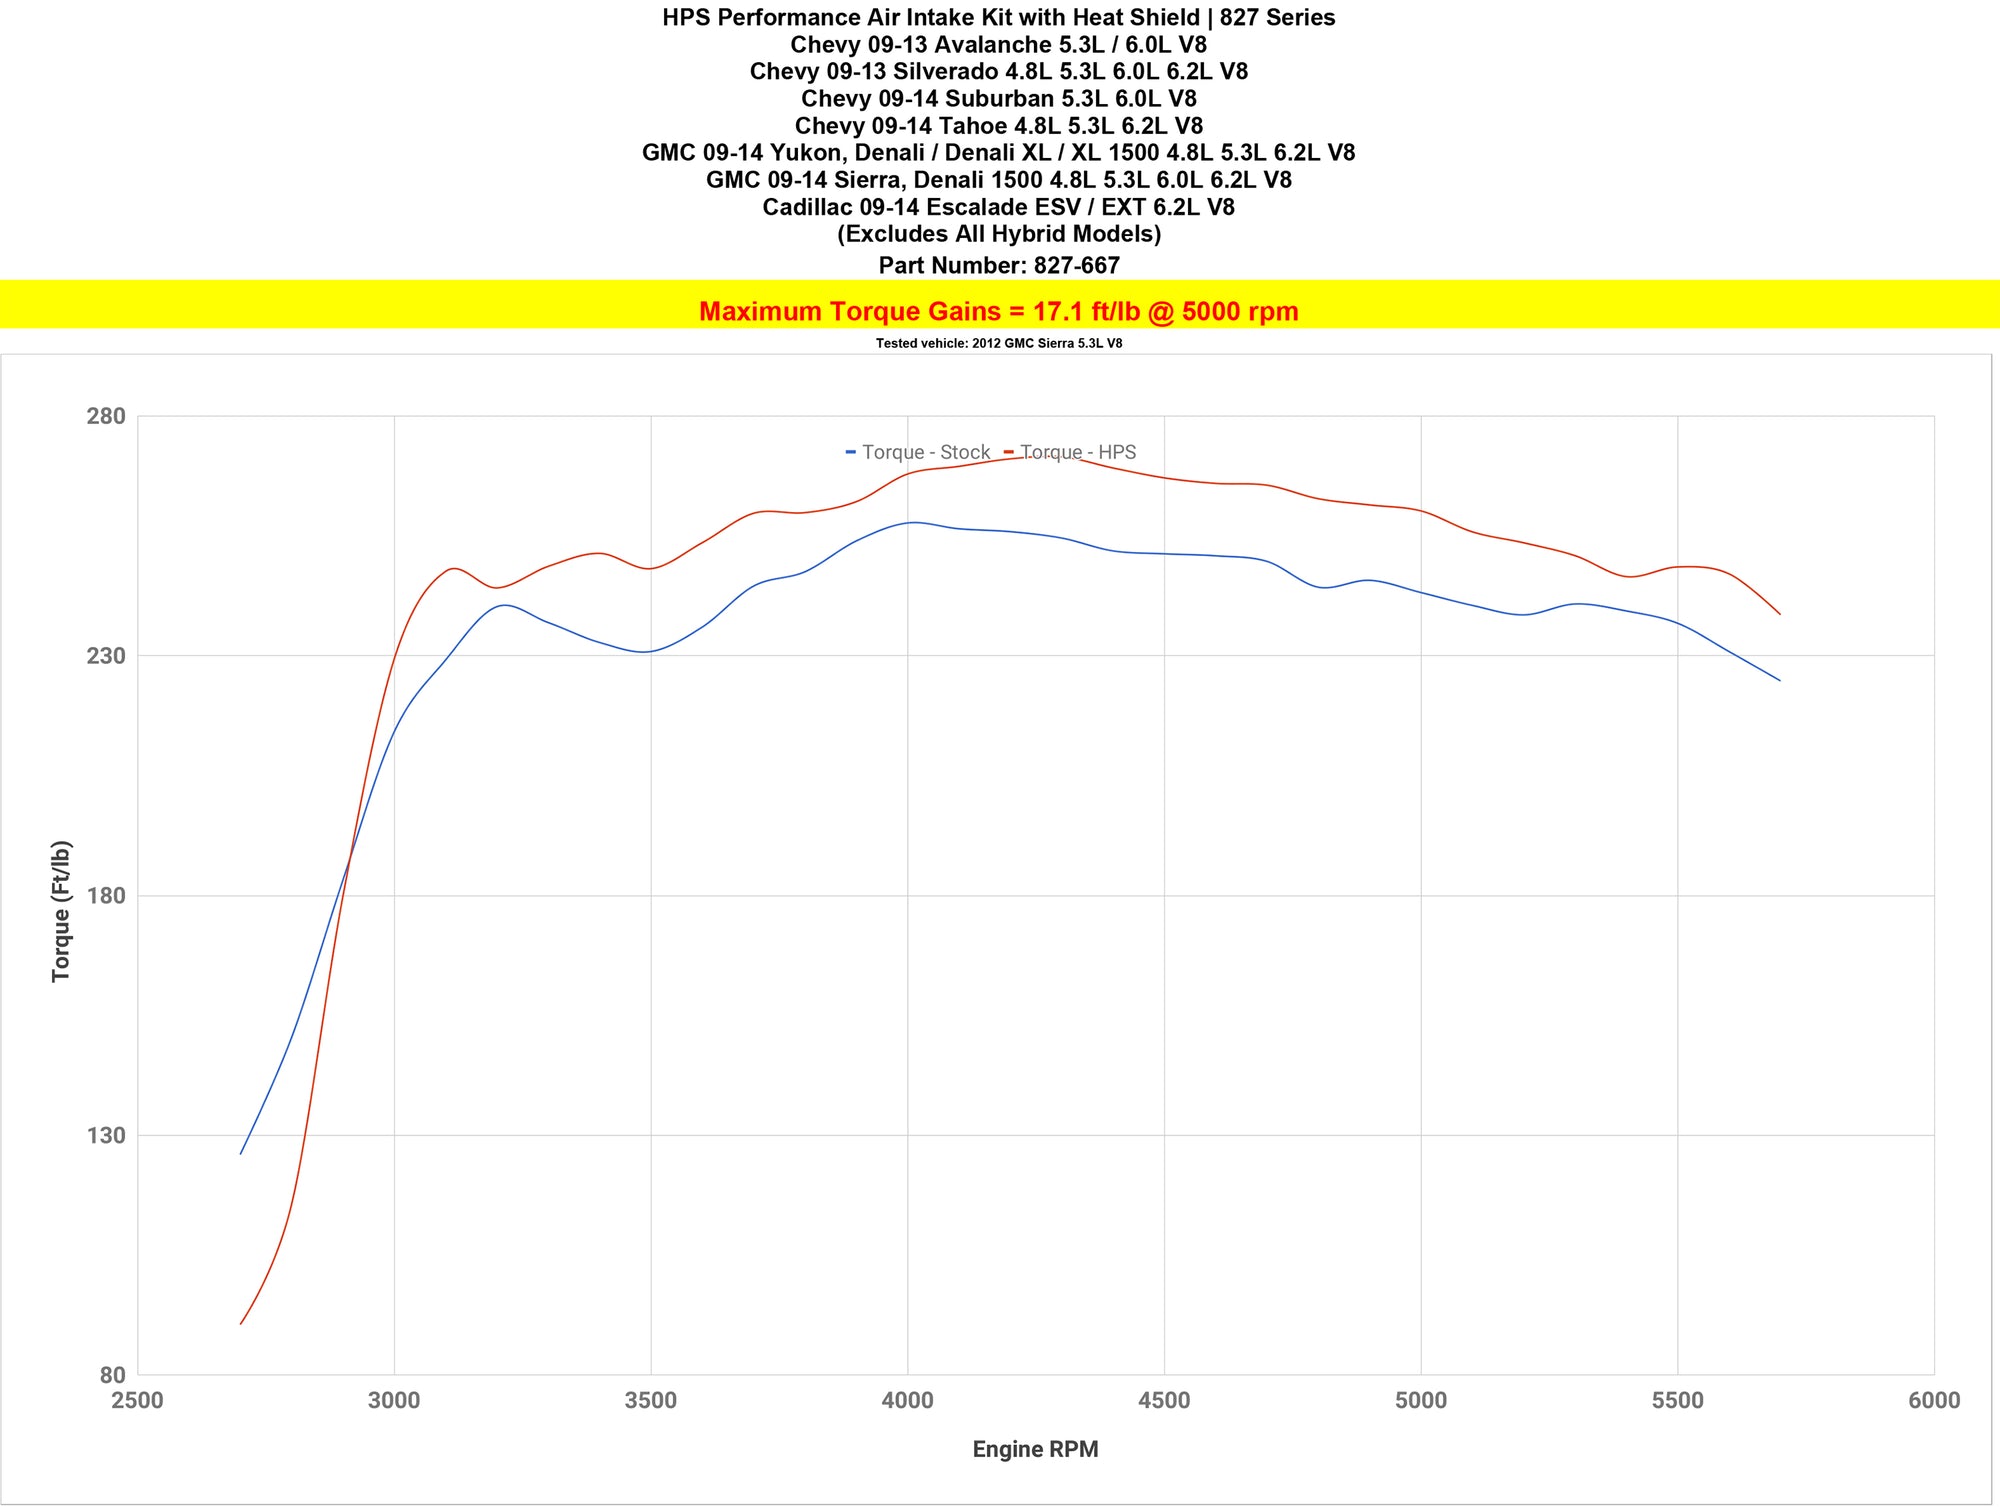 Dyno proven gains 17.1 ft/lb HPS Performance Shortram Air Intake Kit 2009-2014 GMC Yukon 4.8L 5.3L 6.2L V8 827-667P